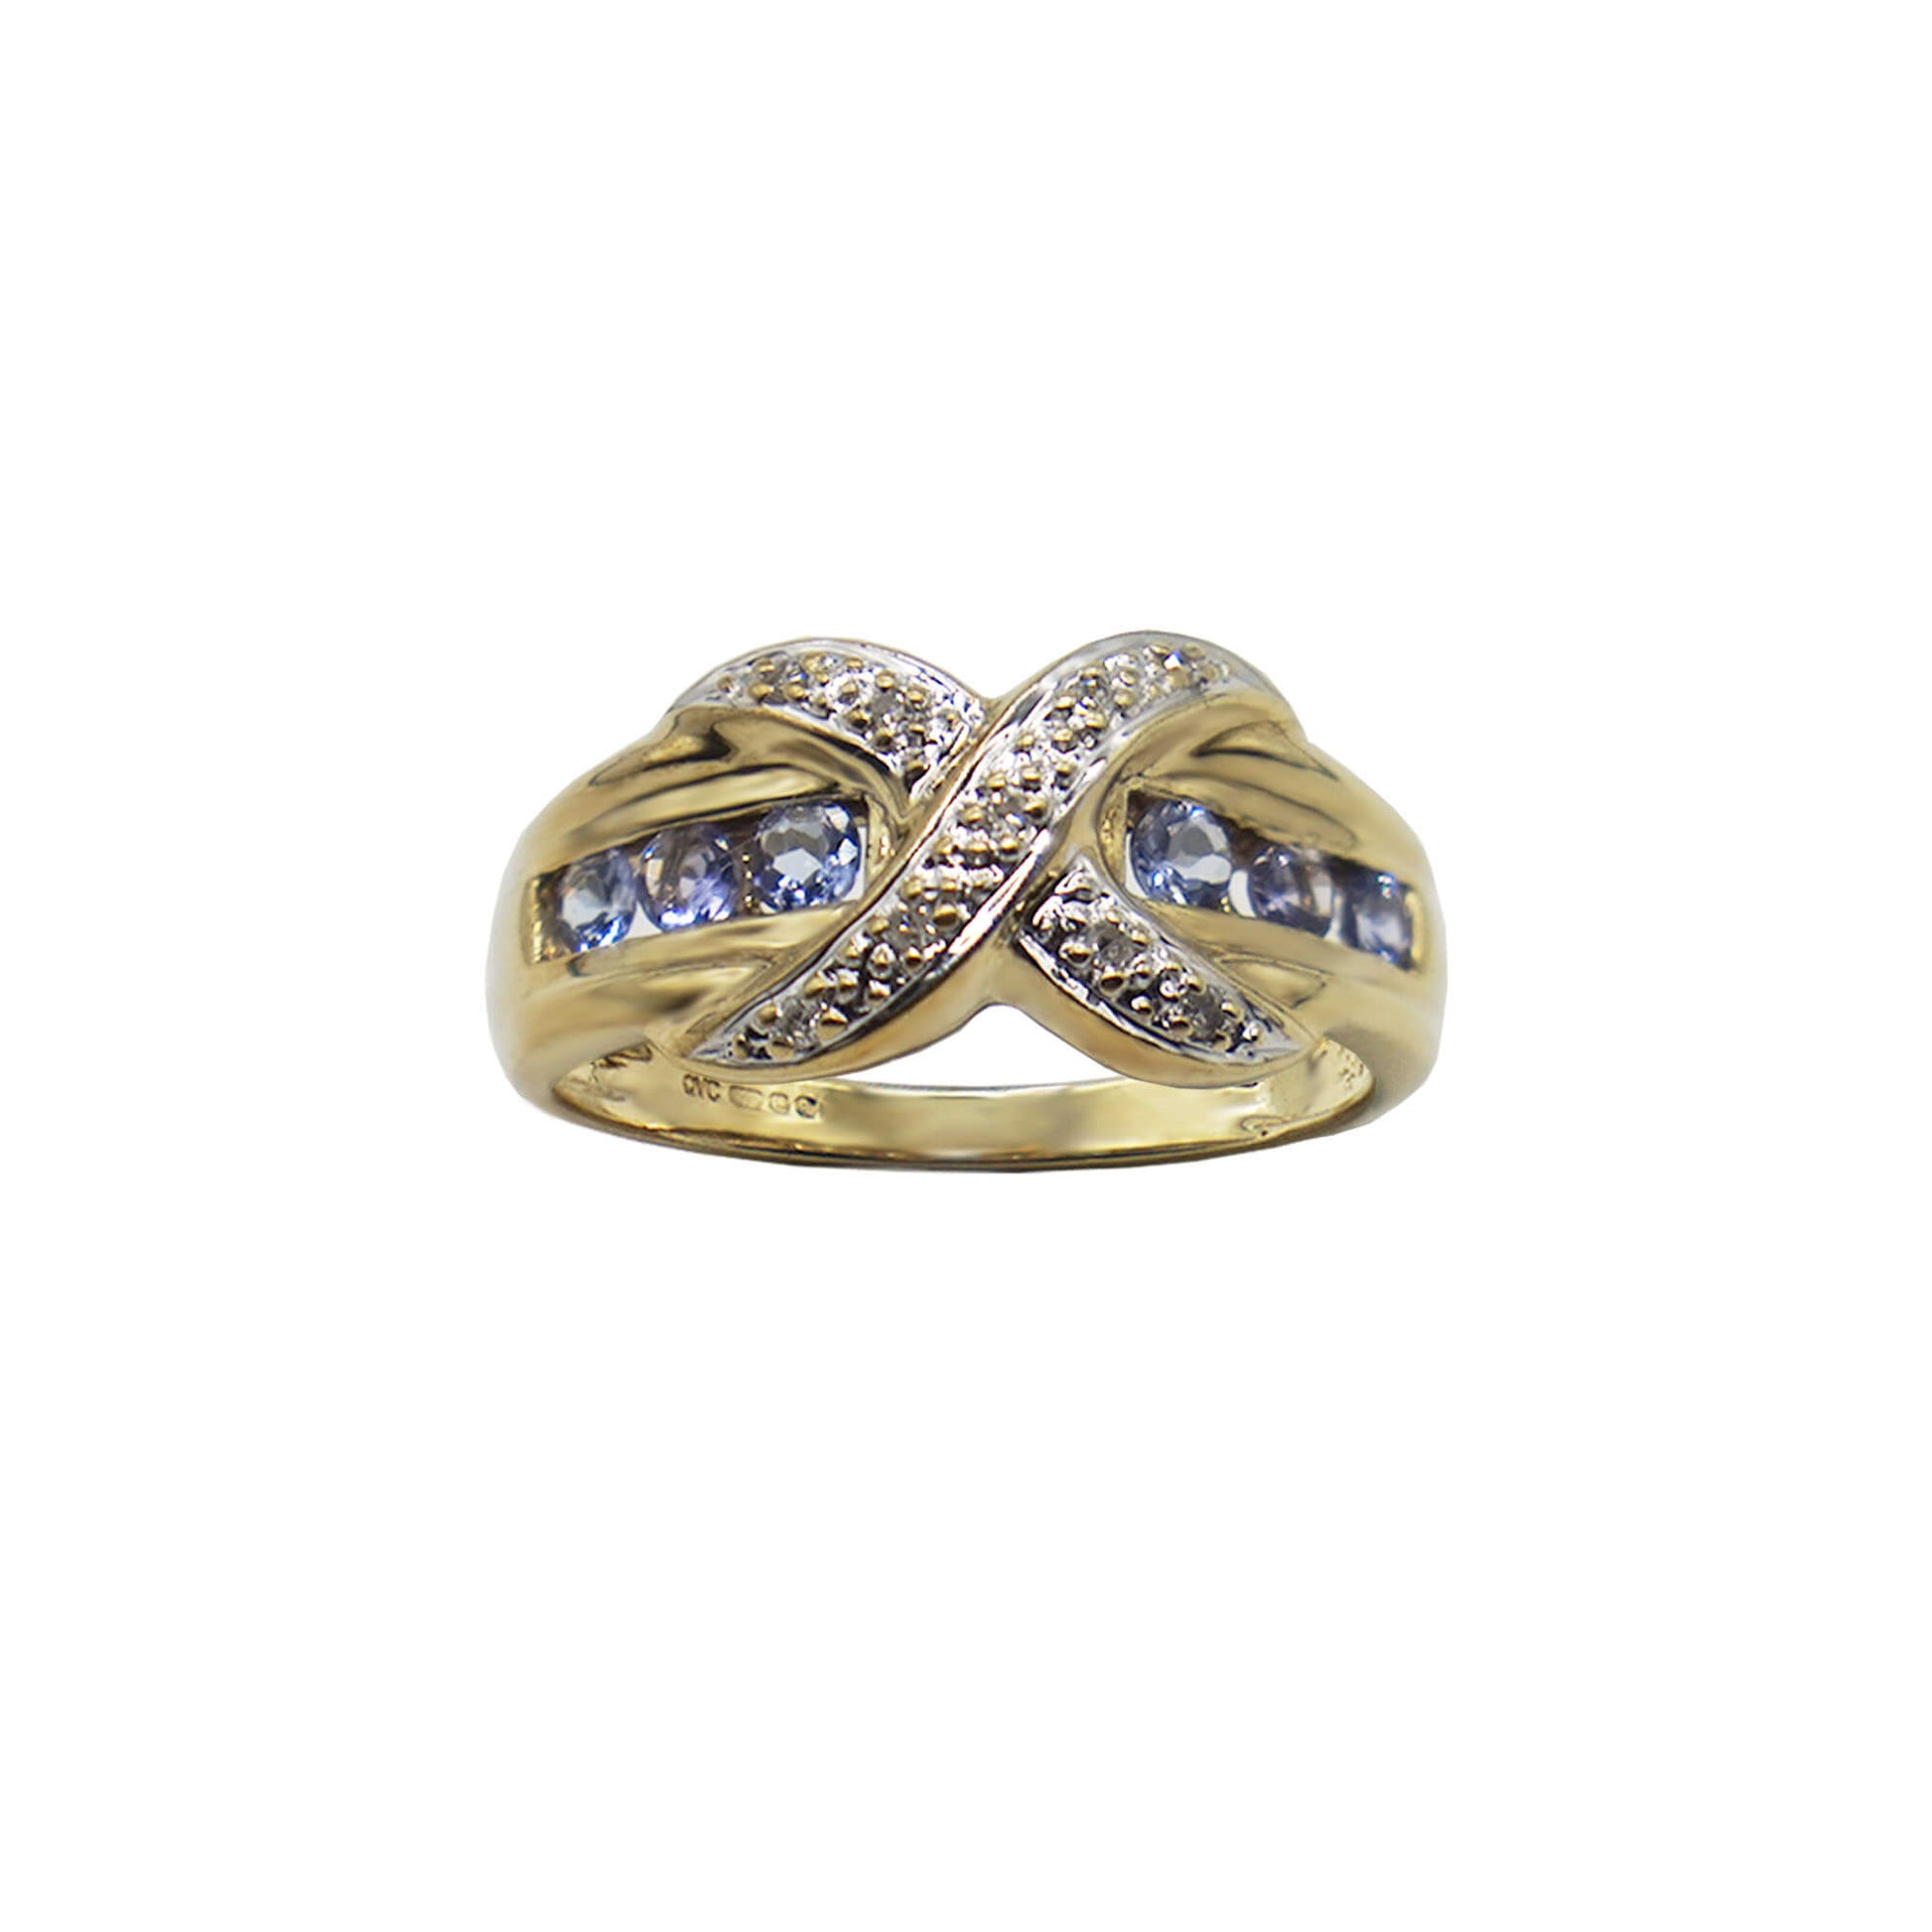 Vintage 9K gold Diamond kiss ring with tanzanite setting, hallmarks visible on inner band.